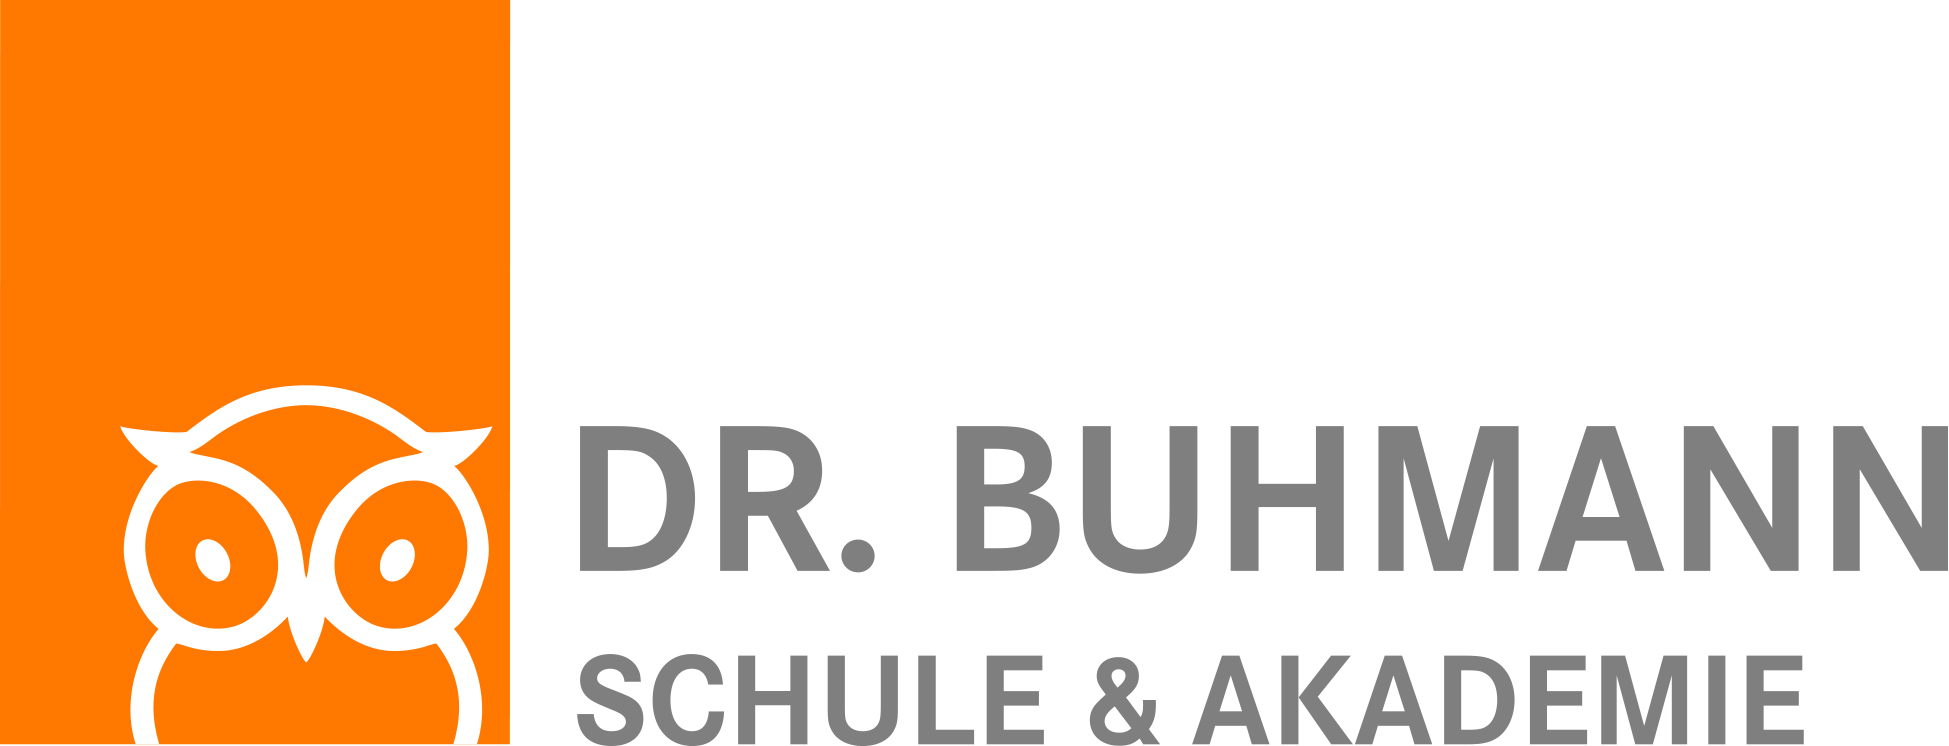 Dr.Buhmann Schule & Akademie Logo